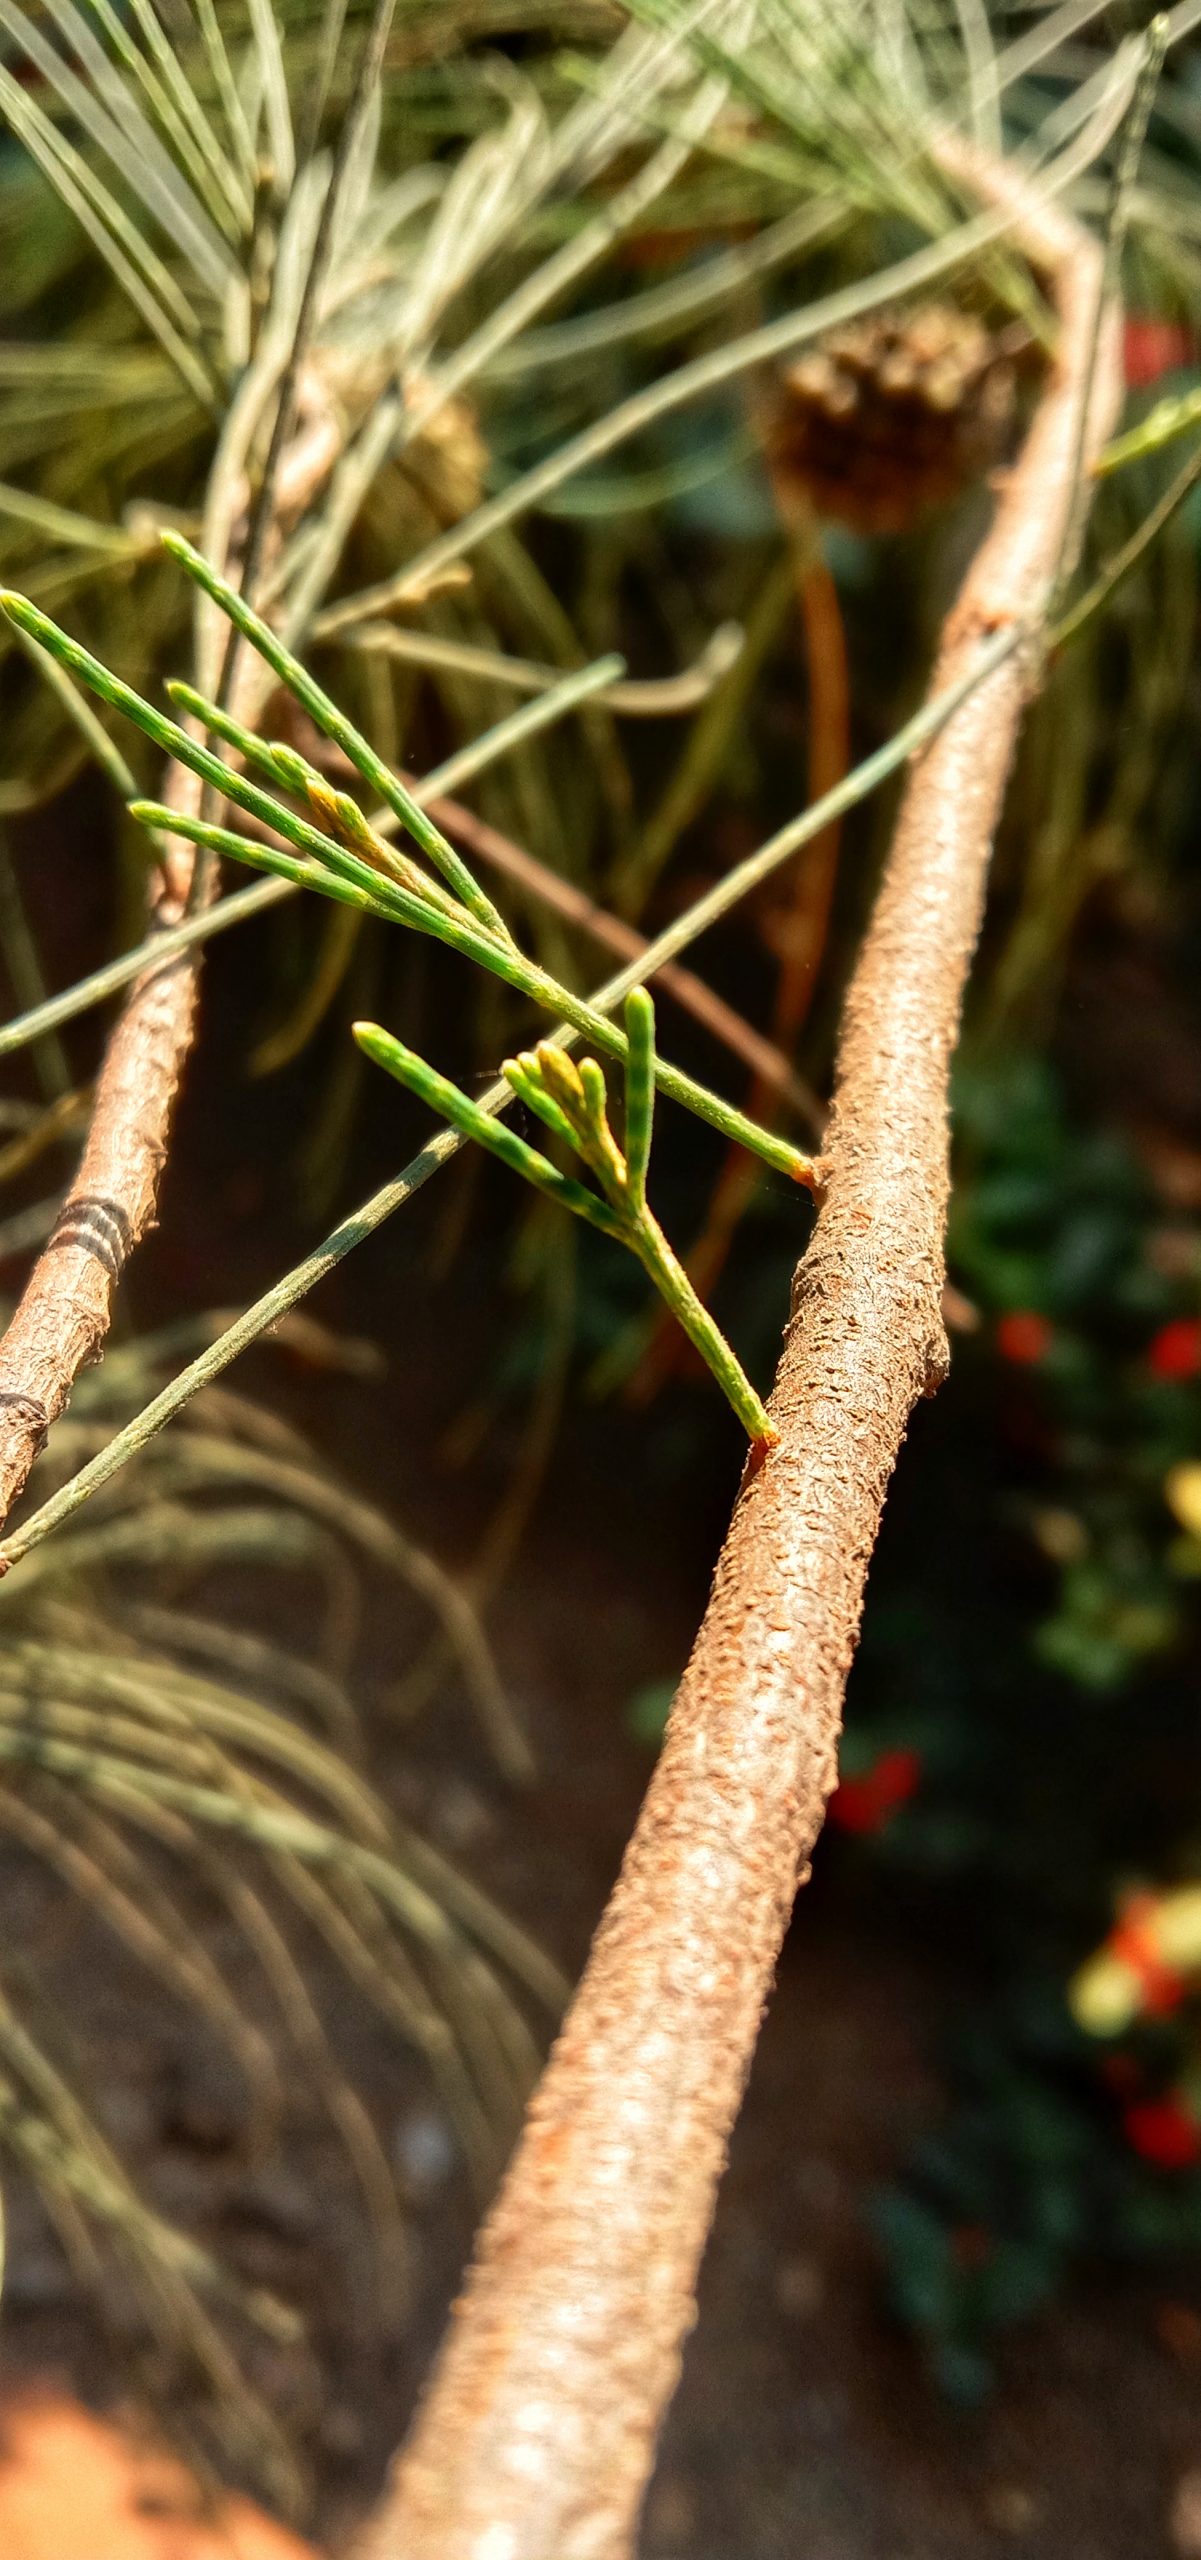 Knobcone pine limb